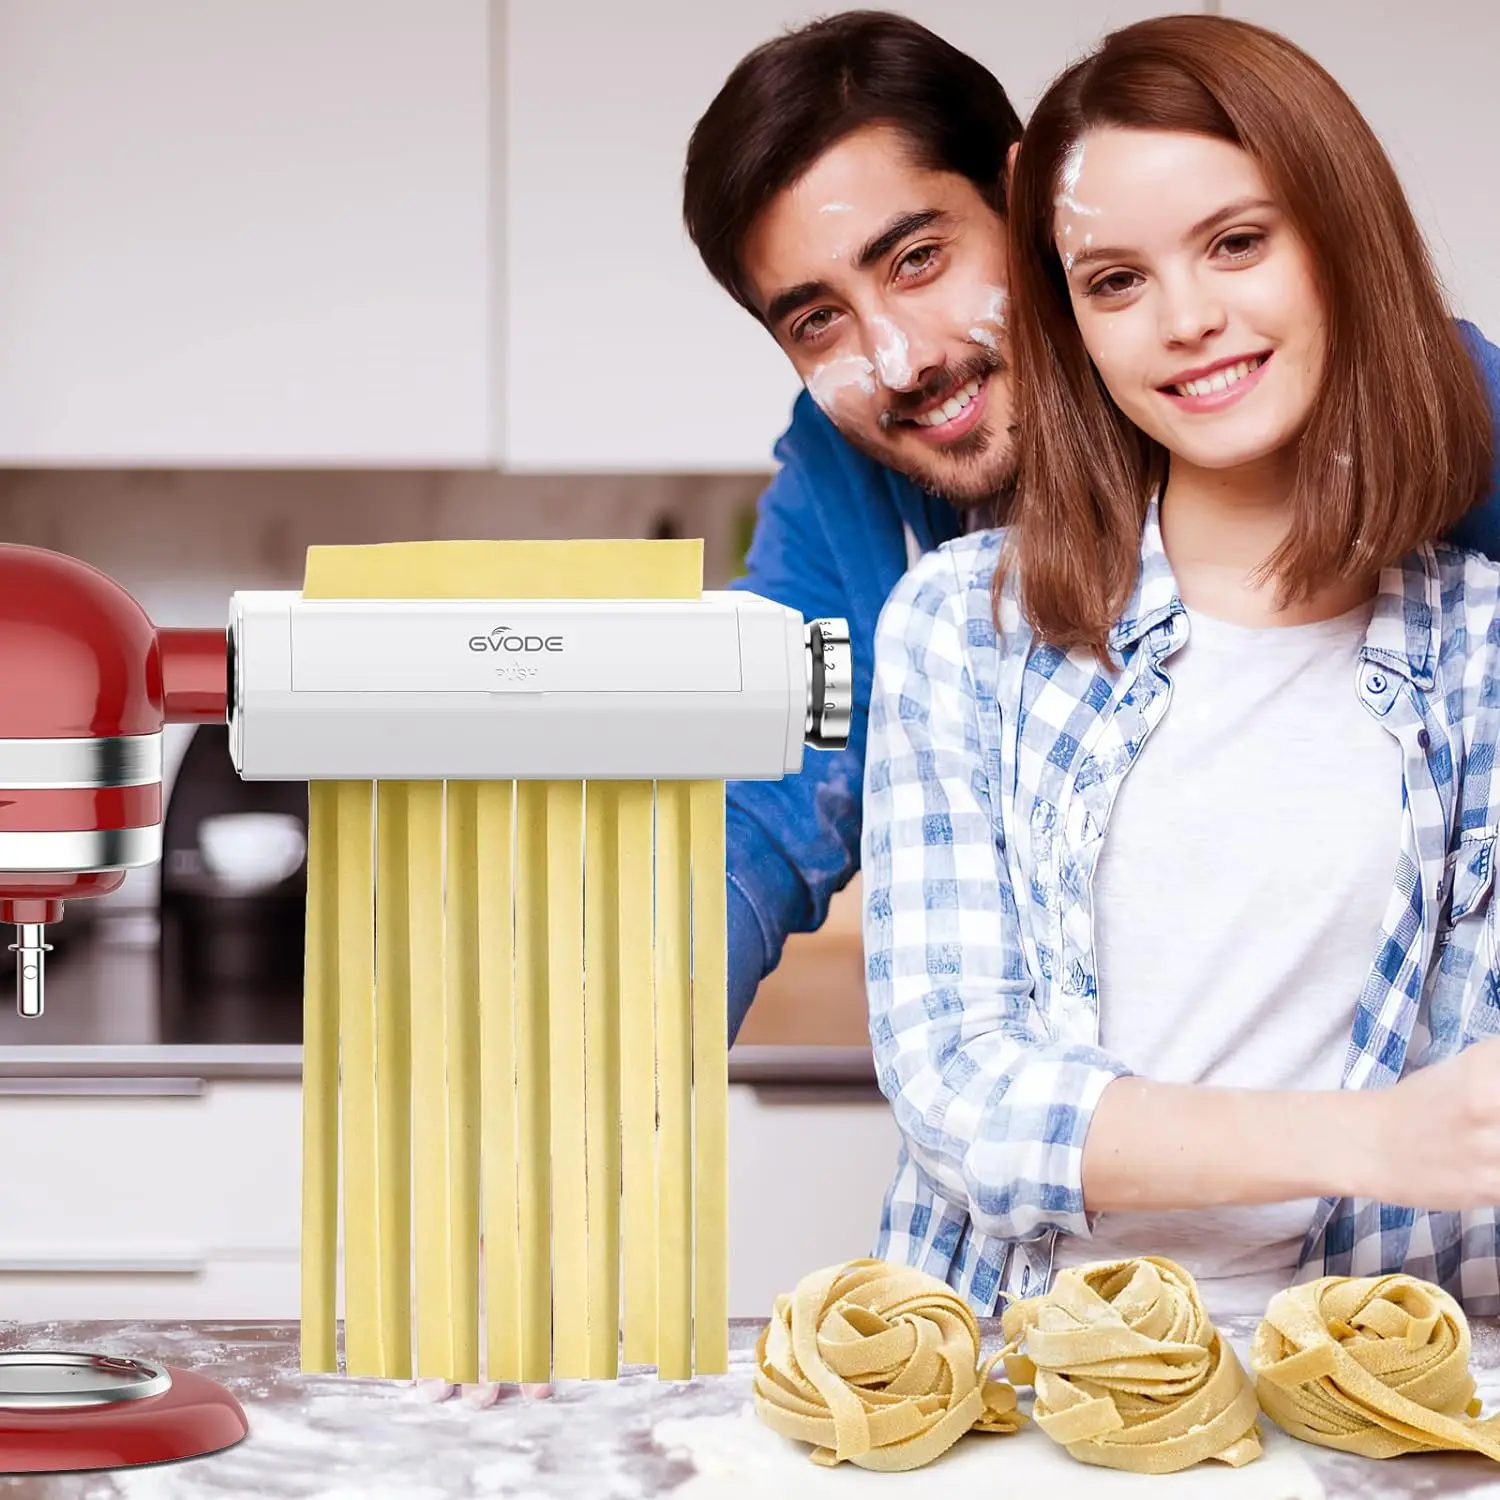 Maker Attachment for All Mixers, Noodle Ravioli Maker Kitchen Aid Mixer  Accessories 3 In 1 Including Dough Roller Spaghetti Cut - AliExpress